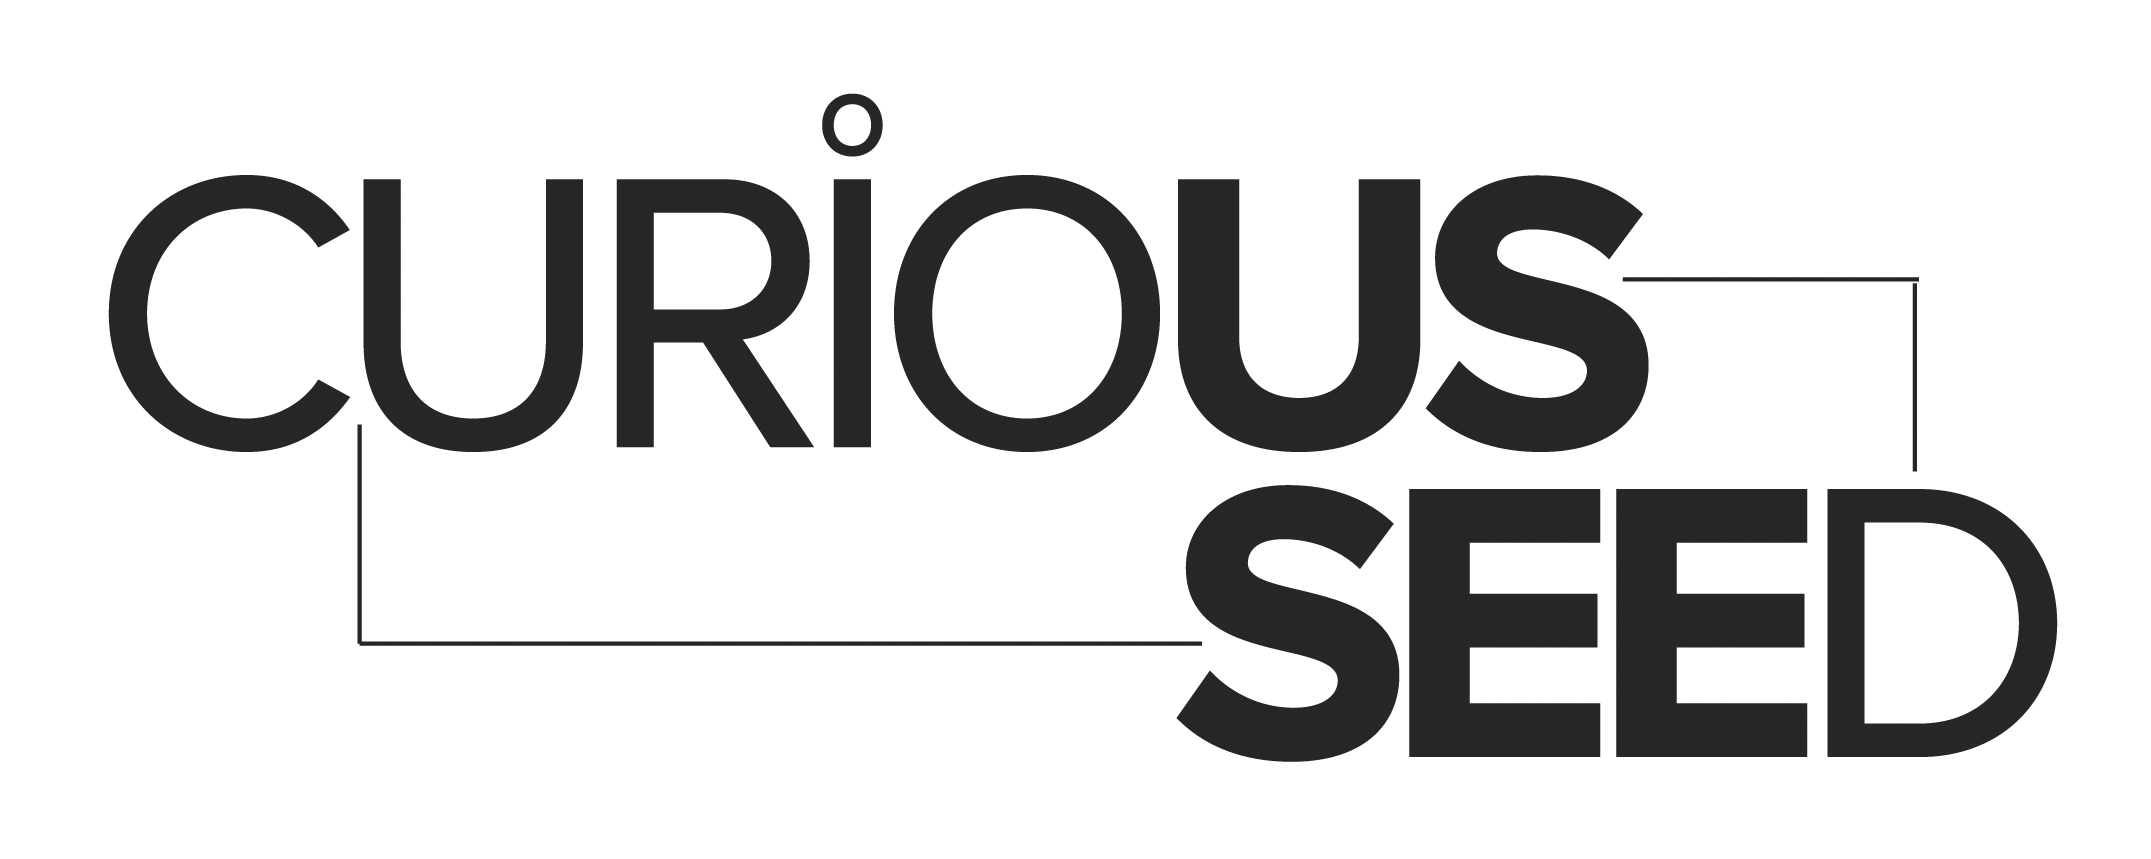 CuriousSeedlogo2016.png